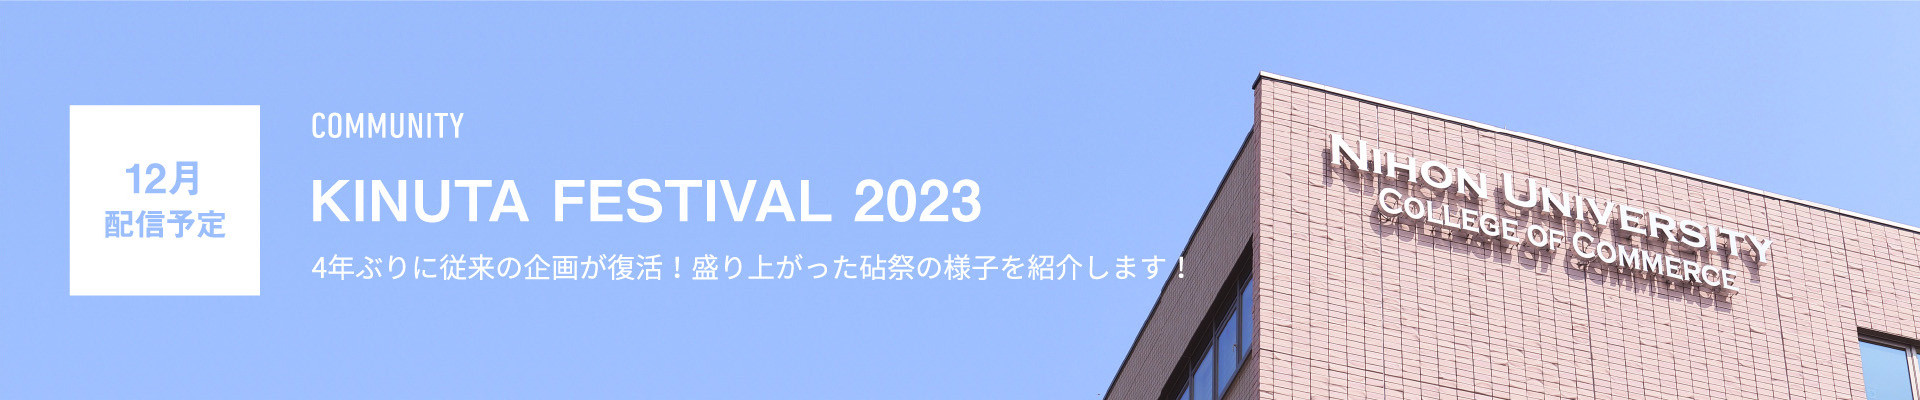 KINUTA FESTIVAL 2023